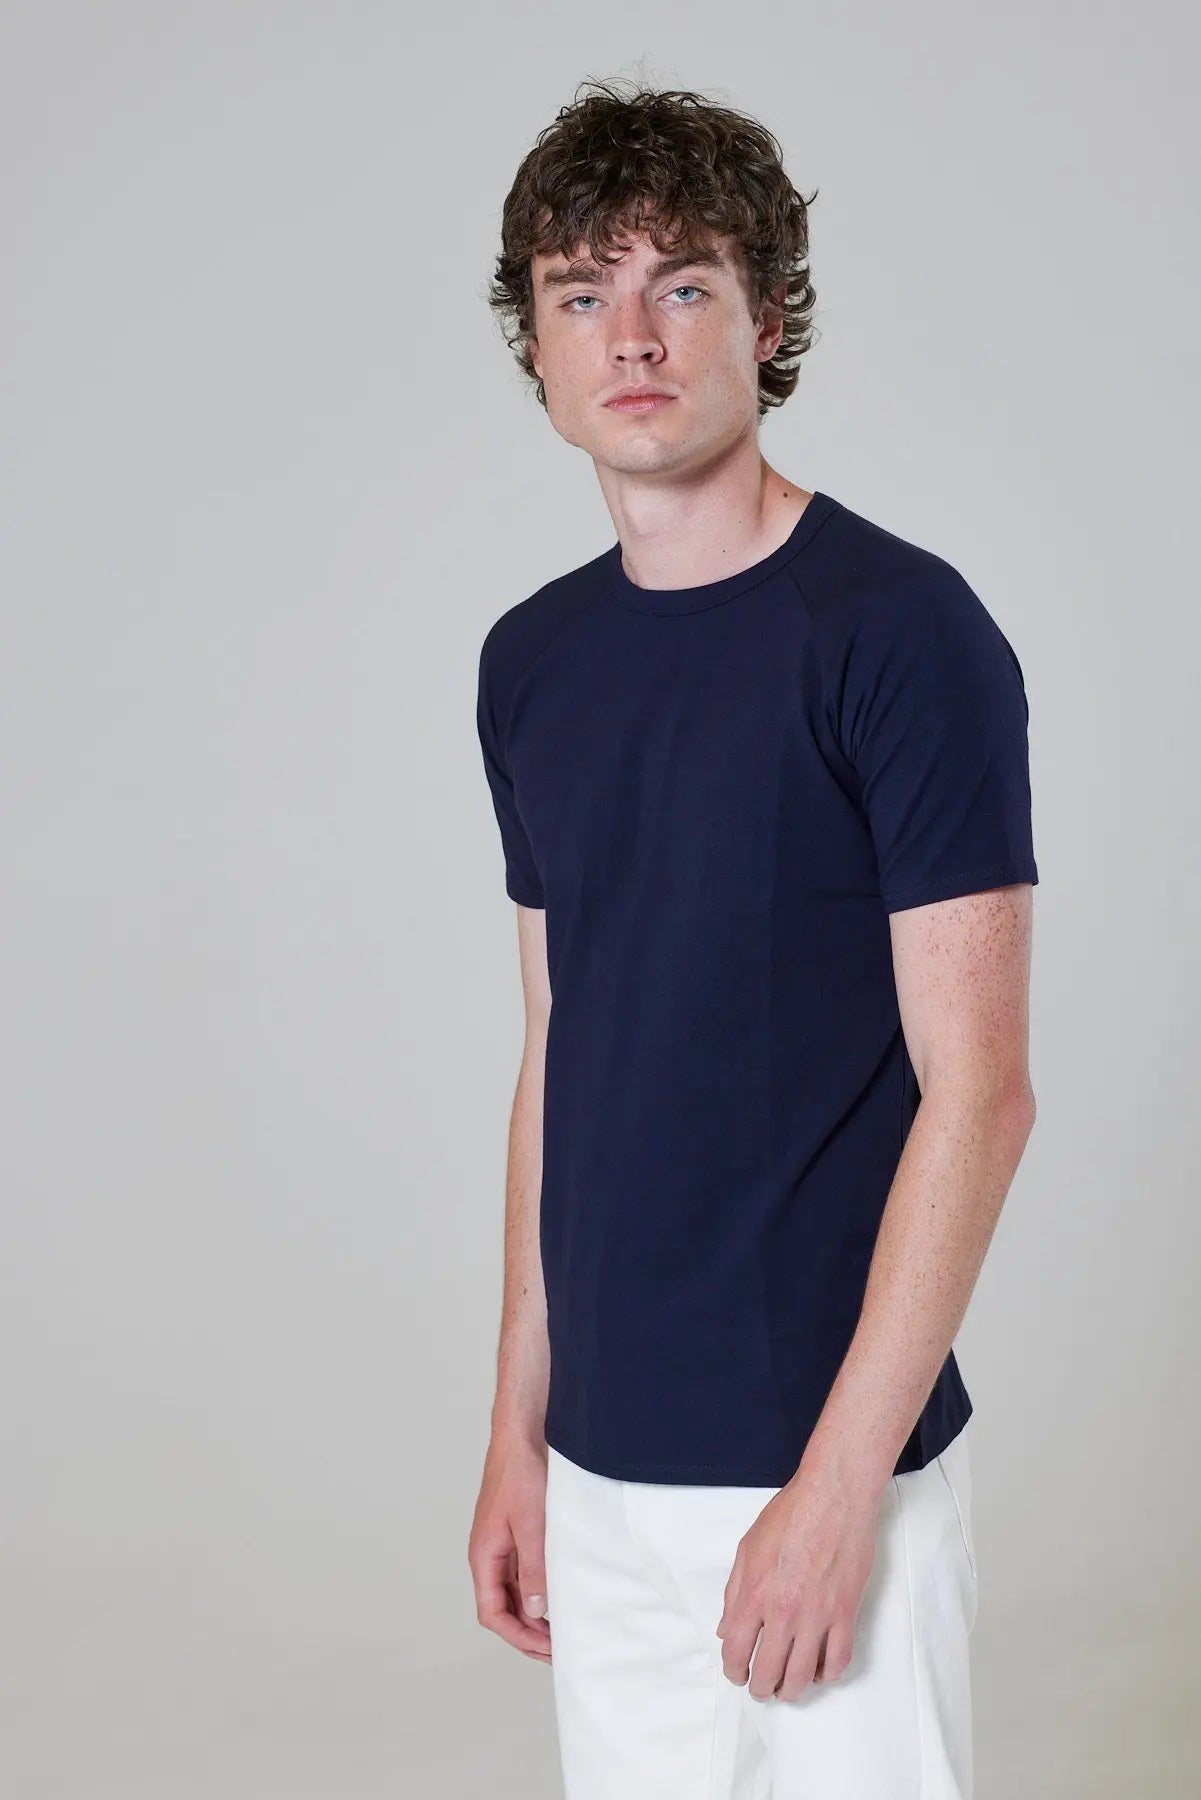 Hoxton Short sleeve t-shirt - Navy Wear London